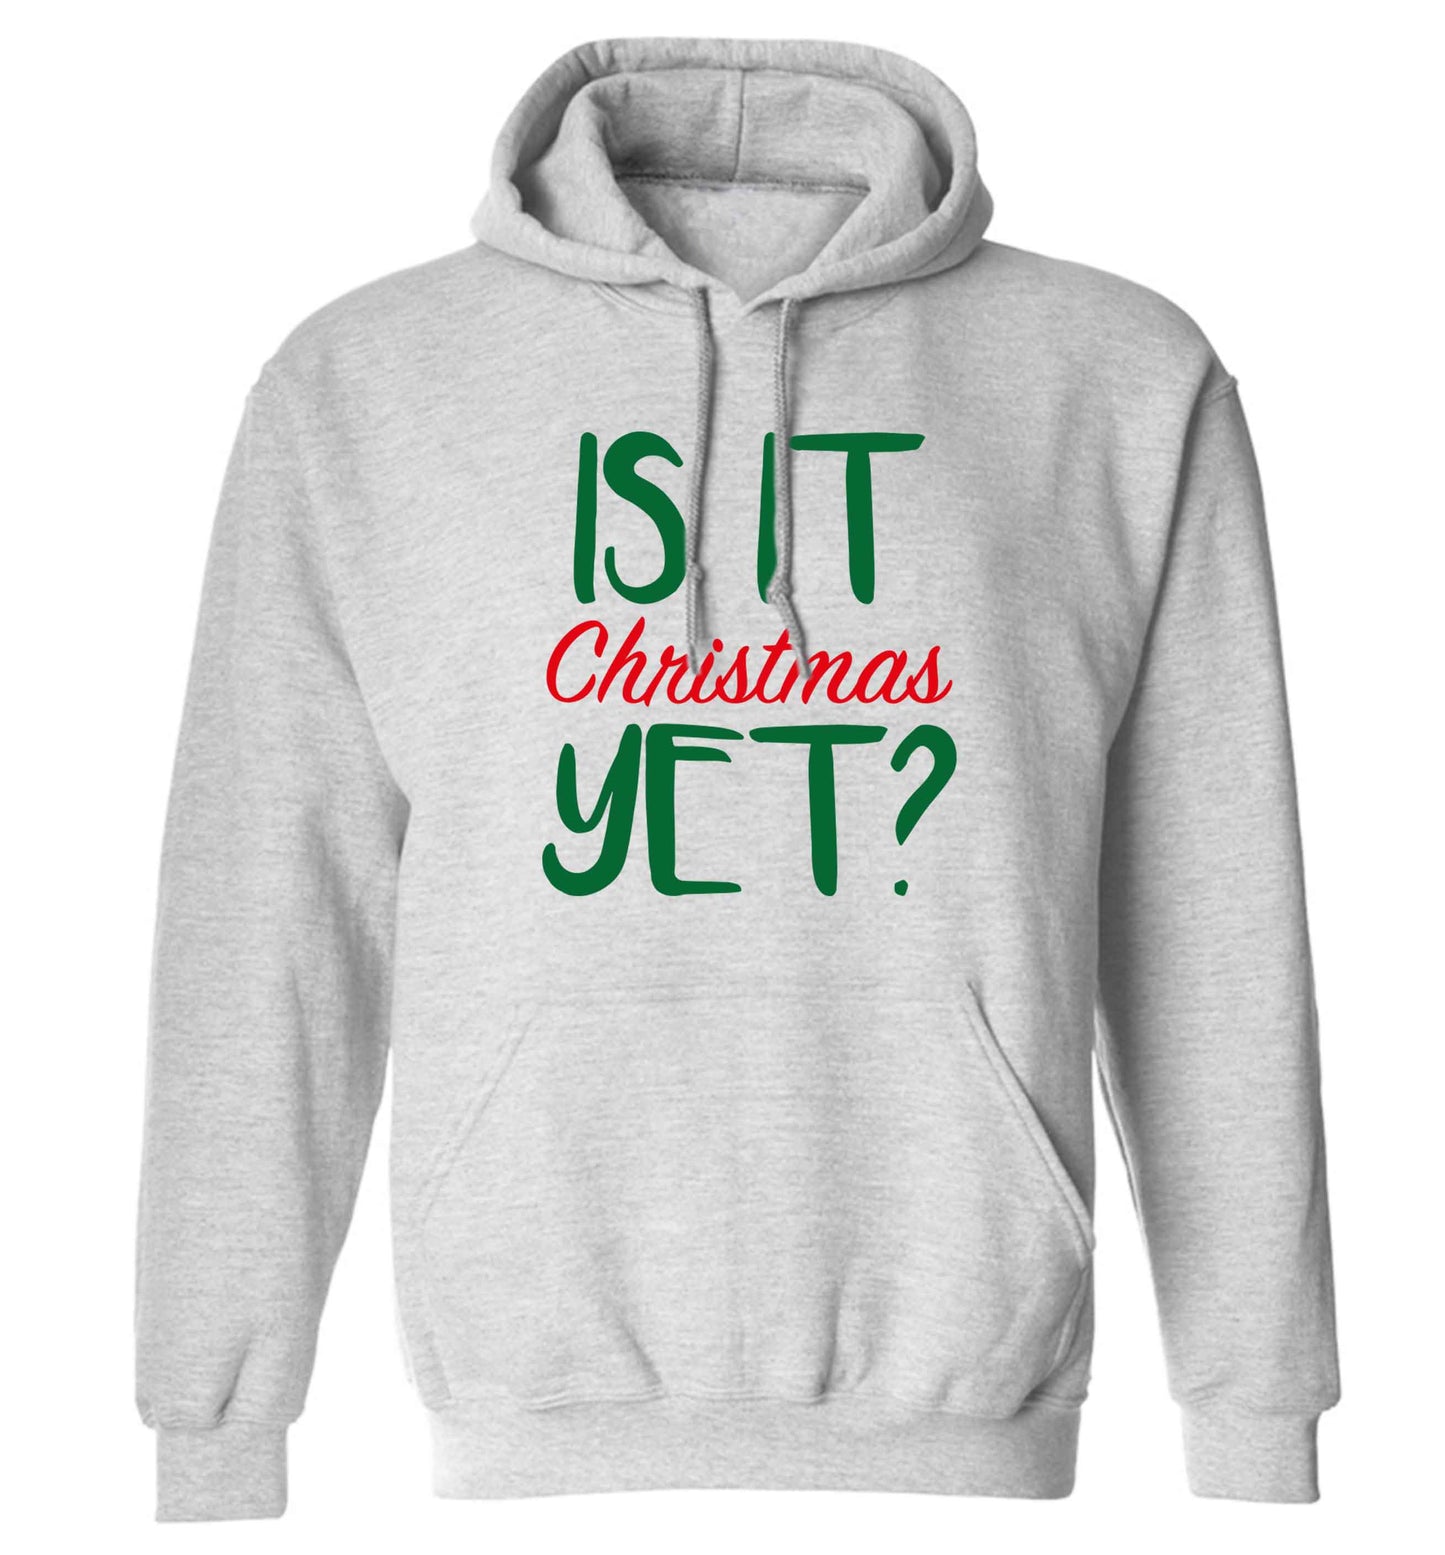 Is it Christmas yet? adults unisex grey hoodie 2XL